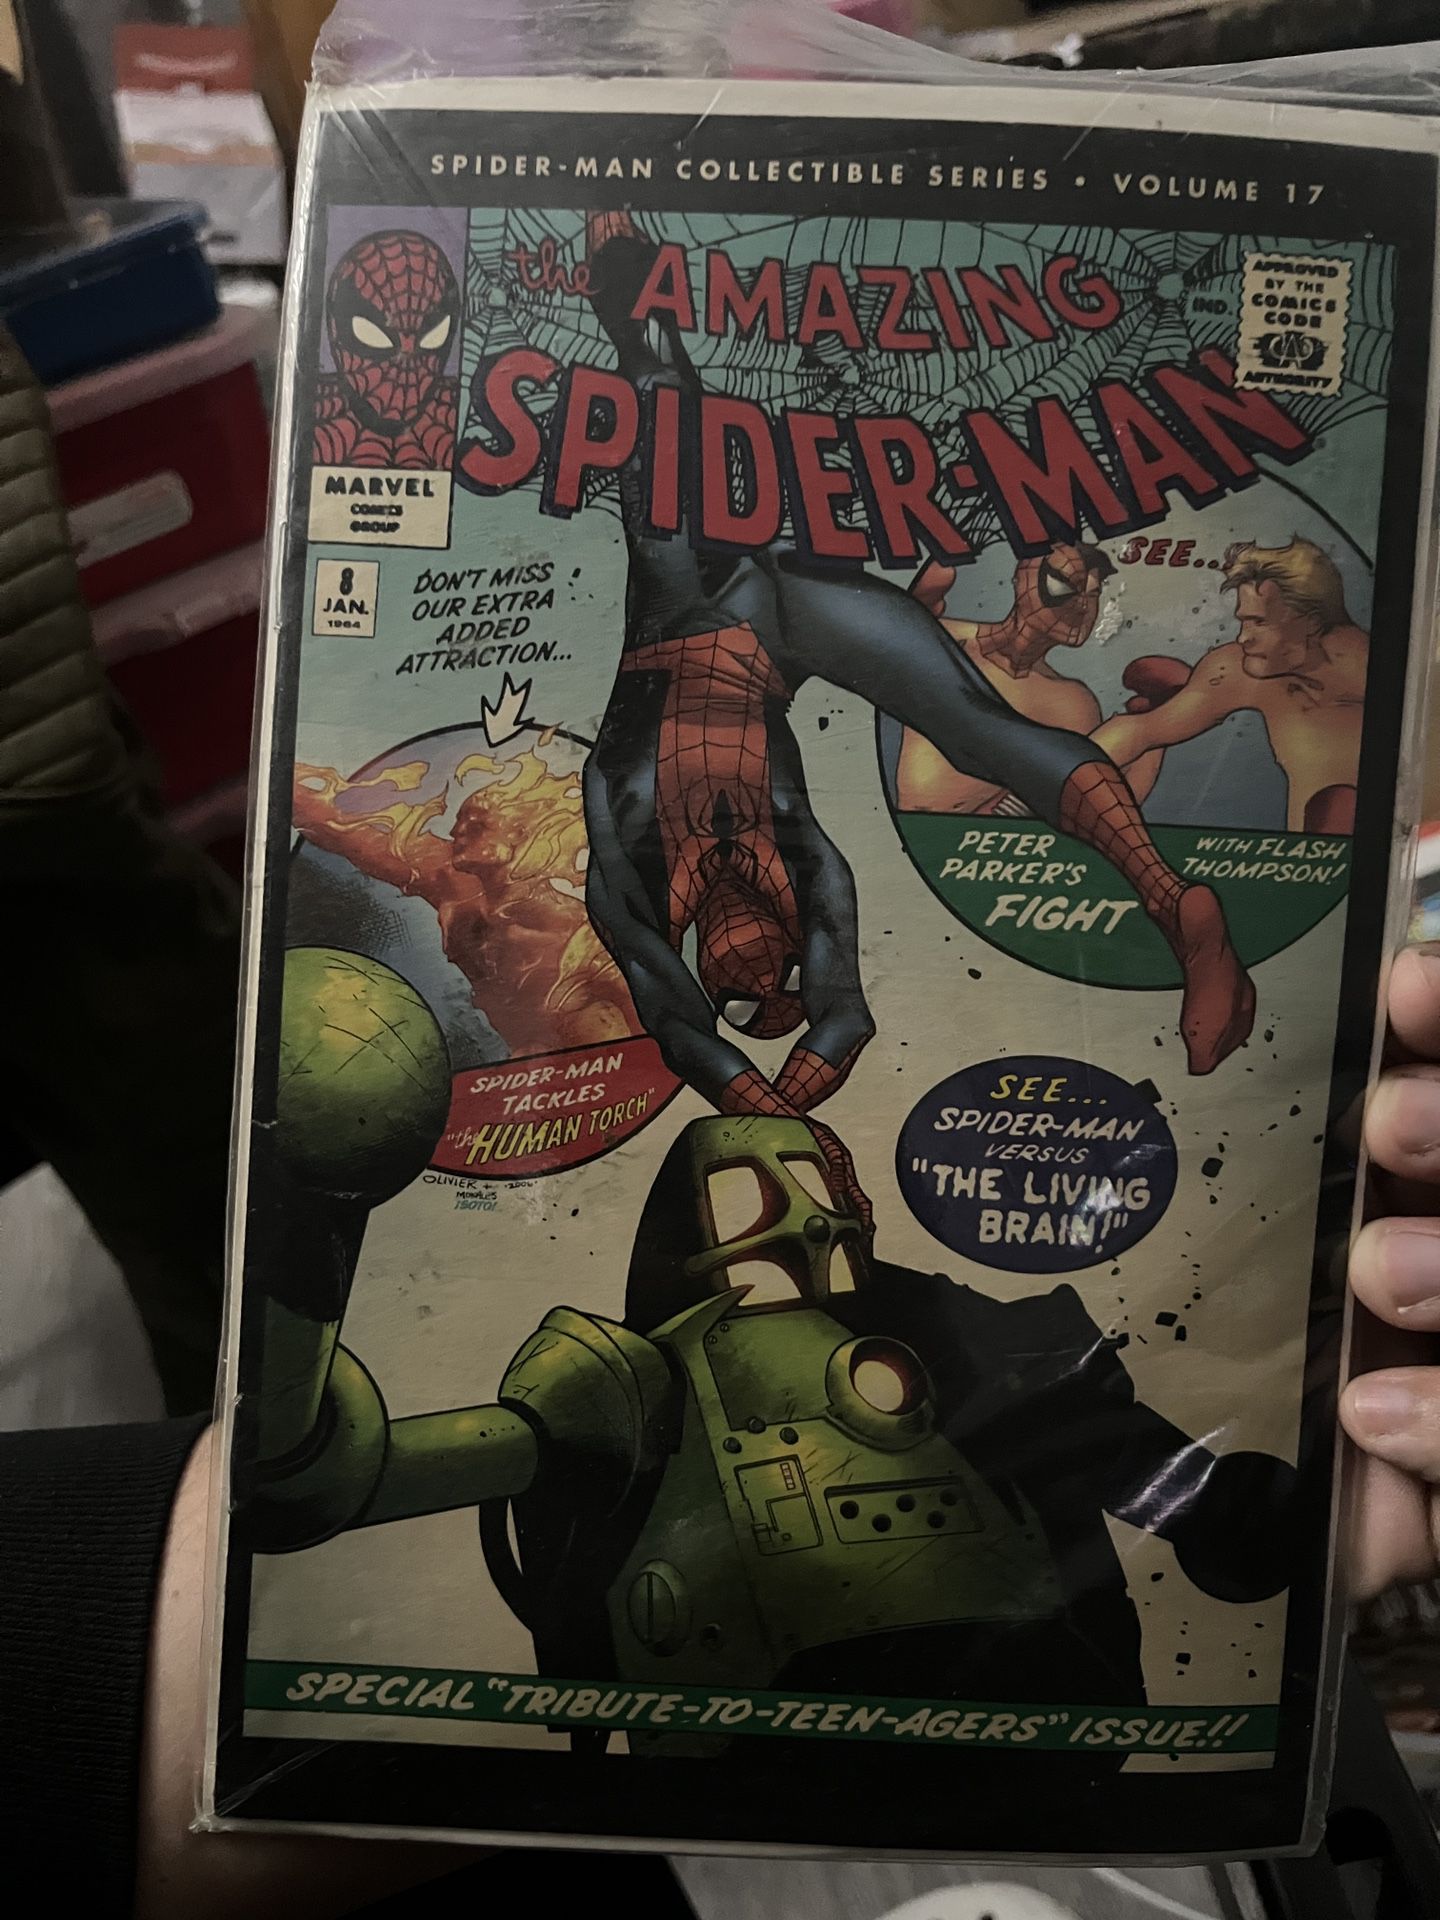 1964 The Amazing Spiderman Collectible Series Volume 17-18